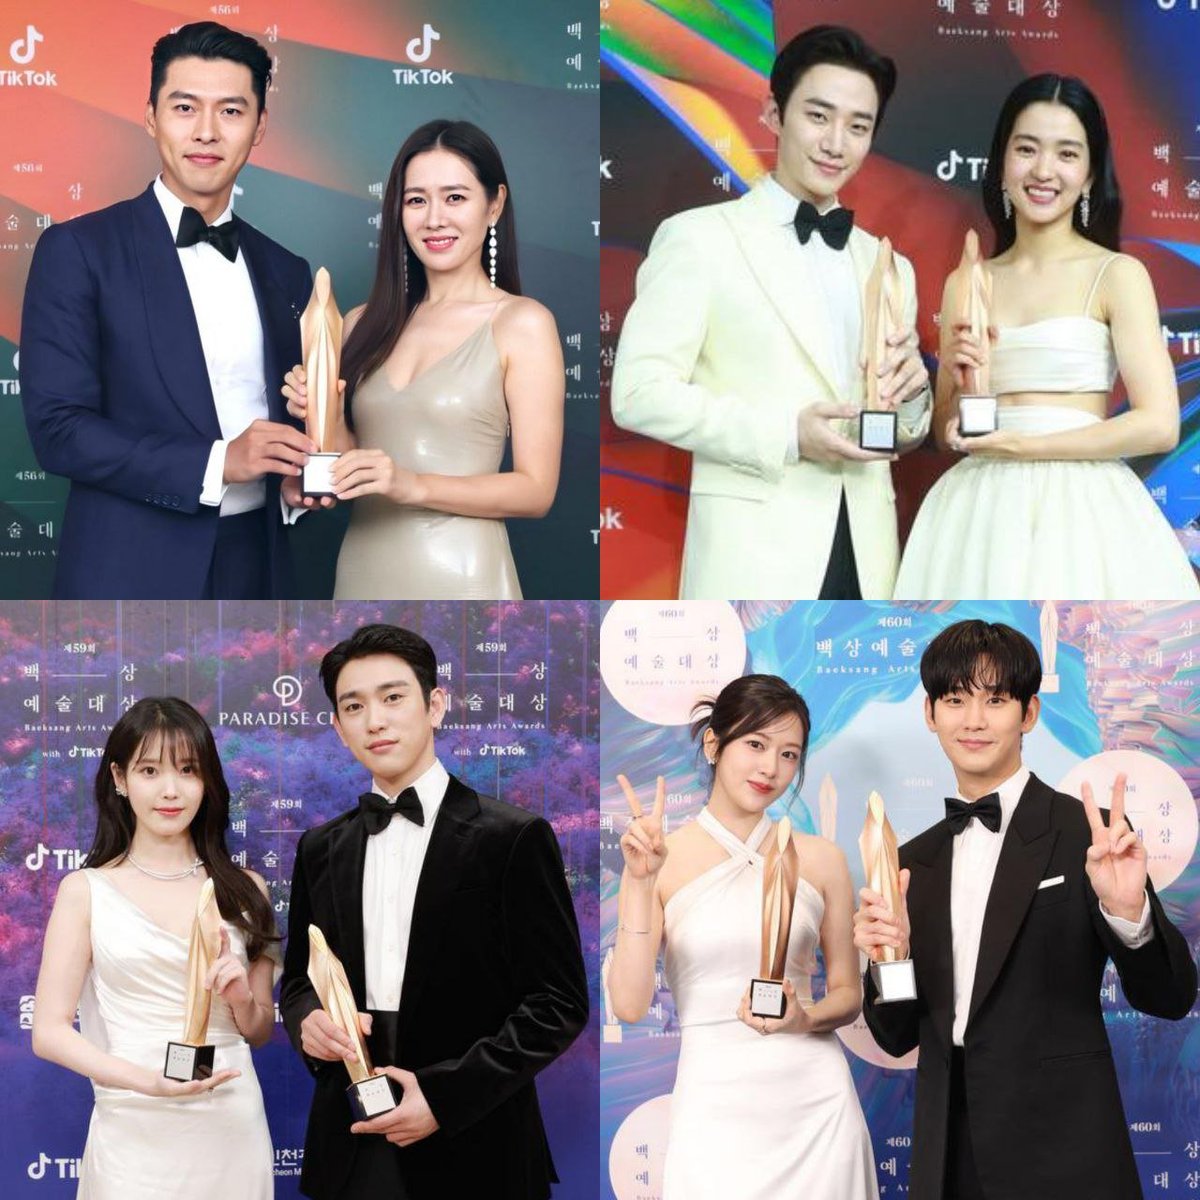 Baeksang Popularity Awards winners from 2020 to 2024 🏆

2020: #SonYeJin & #HyunBin 
2022: #KimTaeRi & #LeeJunHo
2023: #IU & #ParkJinYoung
2024: #IVE's #AnYuJin & #KimSooHyun